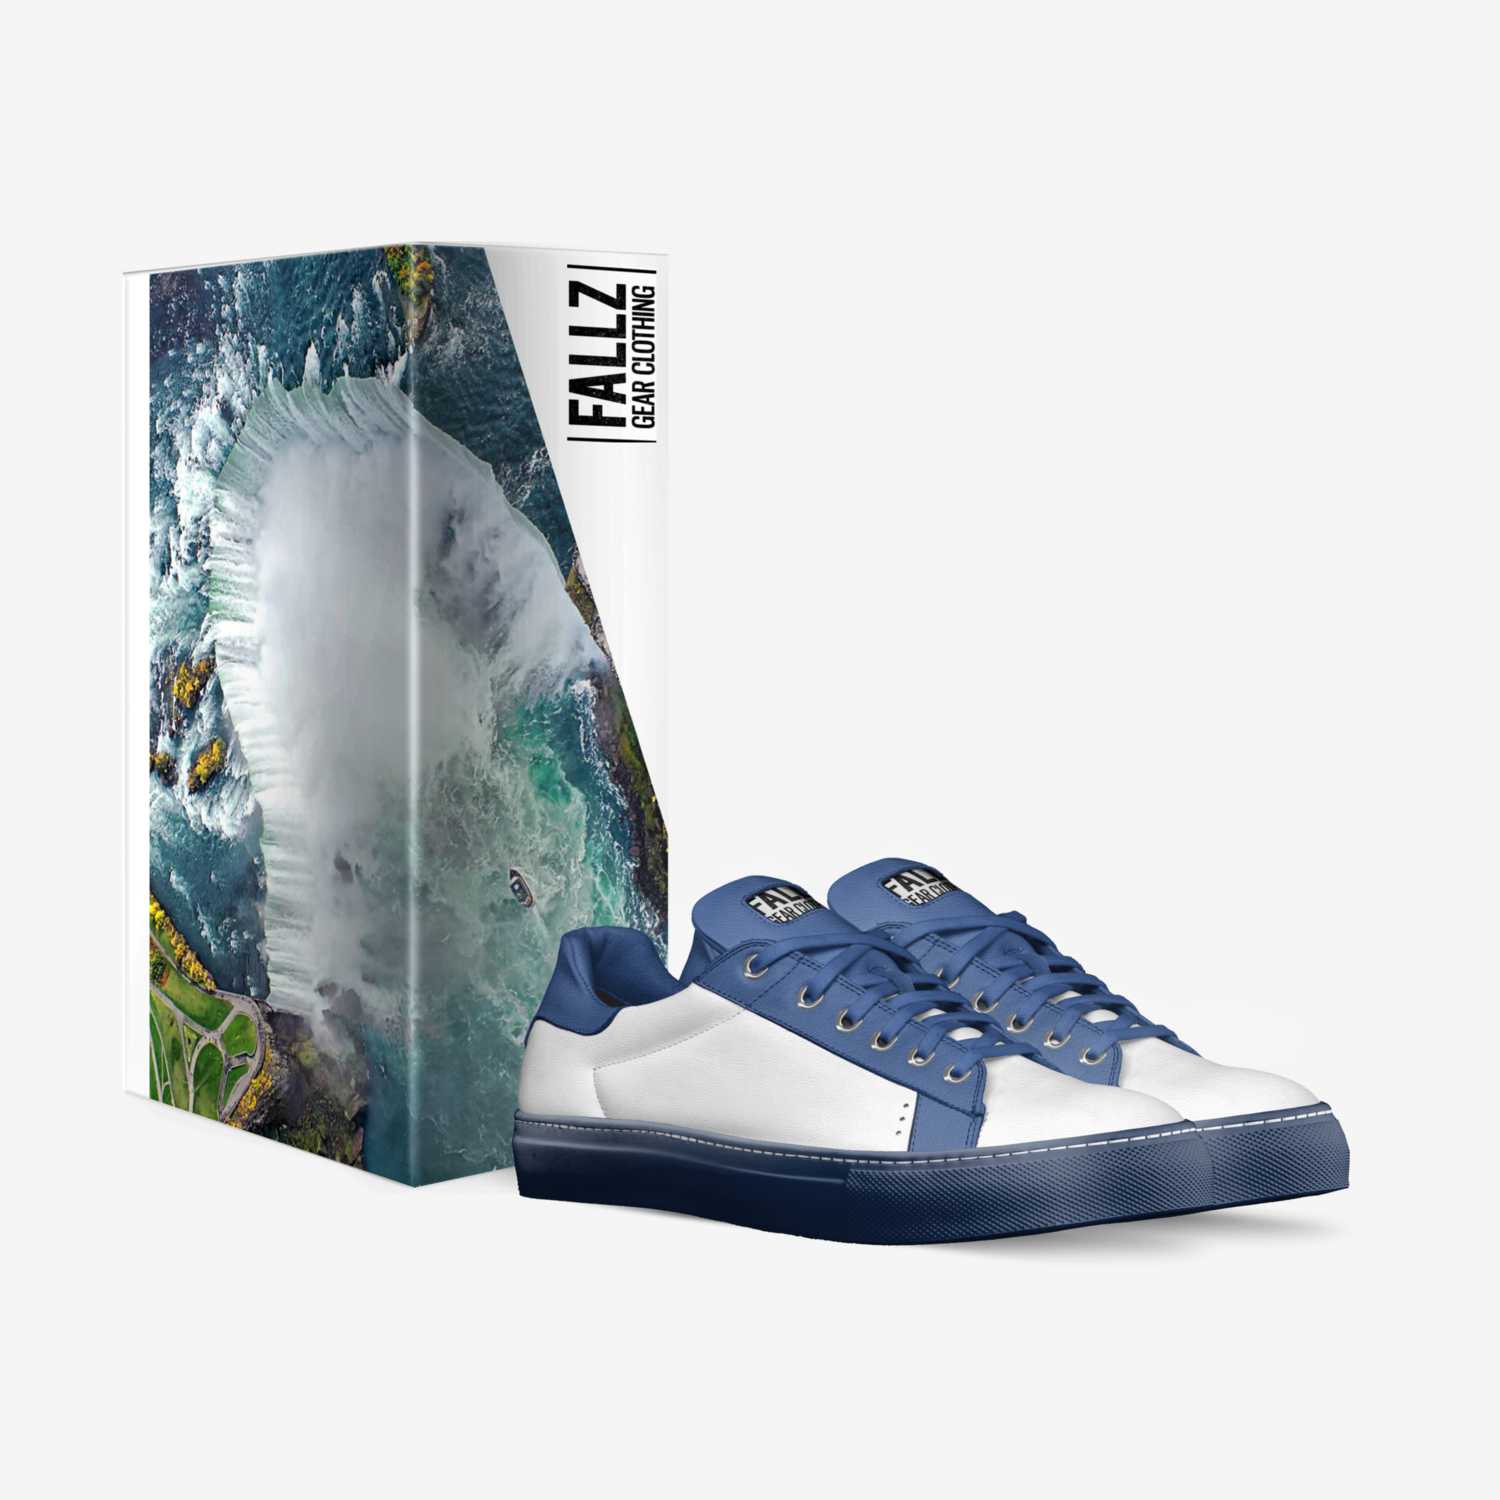 Fallz Gear/ Water custom made in Italy shoes by Fallz Gear | Box view